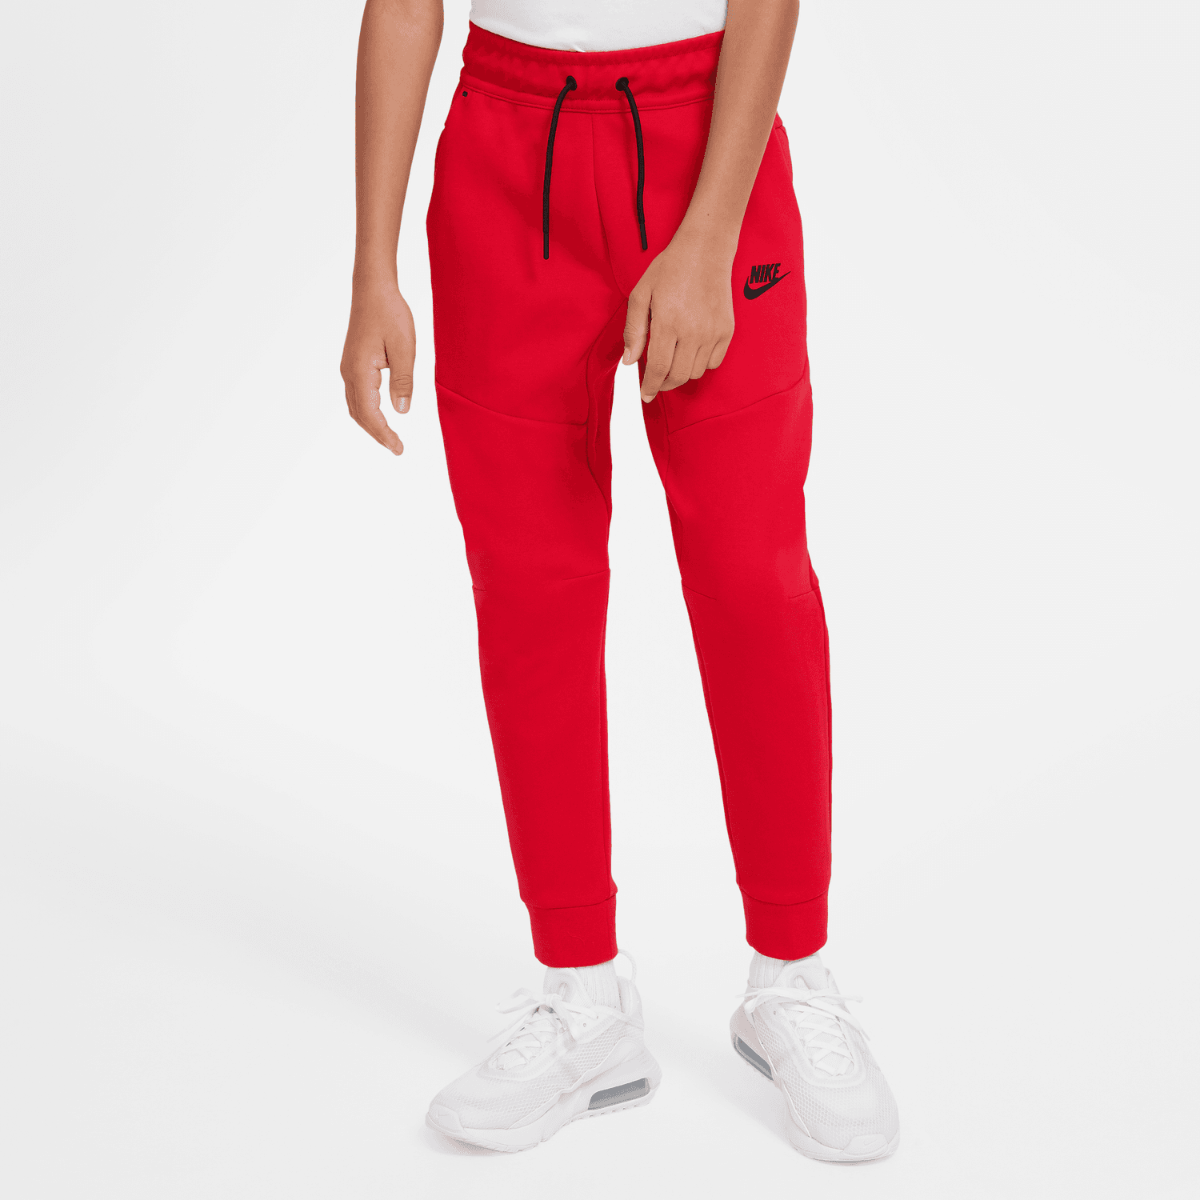 Pantalon jogging Nike Tech Fleece Junior - Rouge/Noir